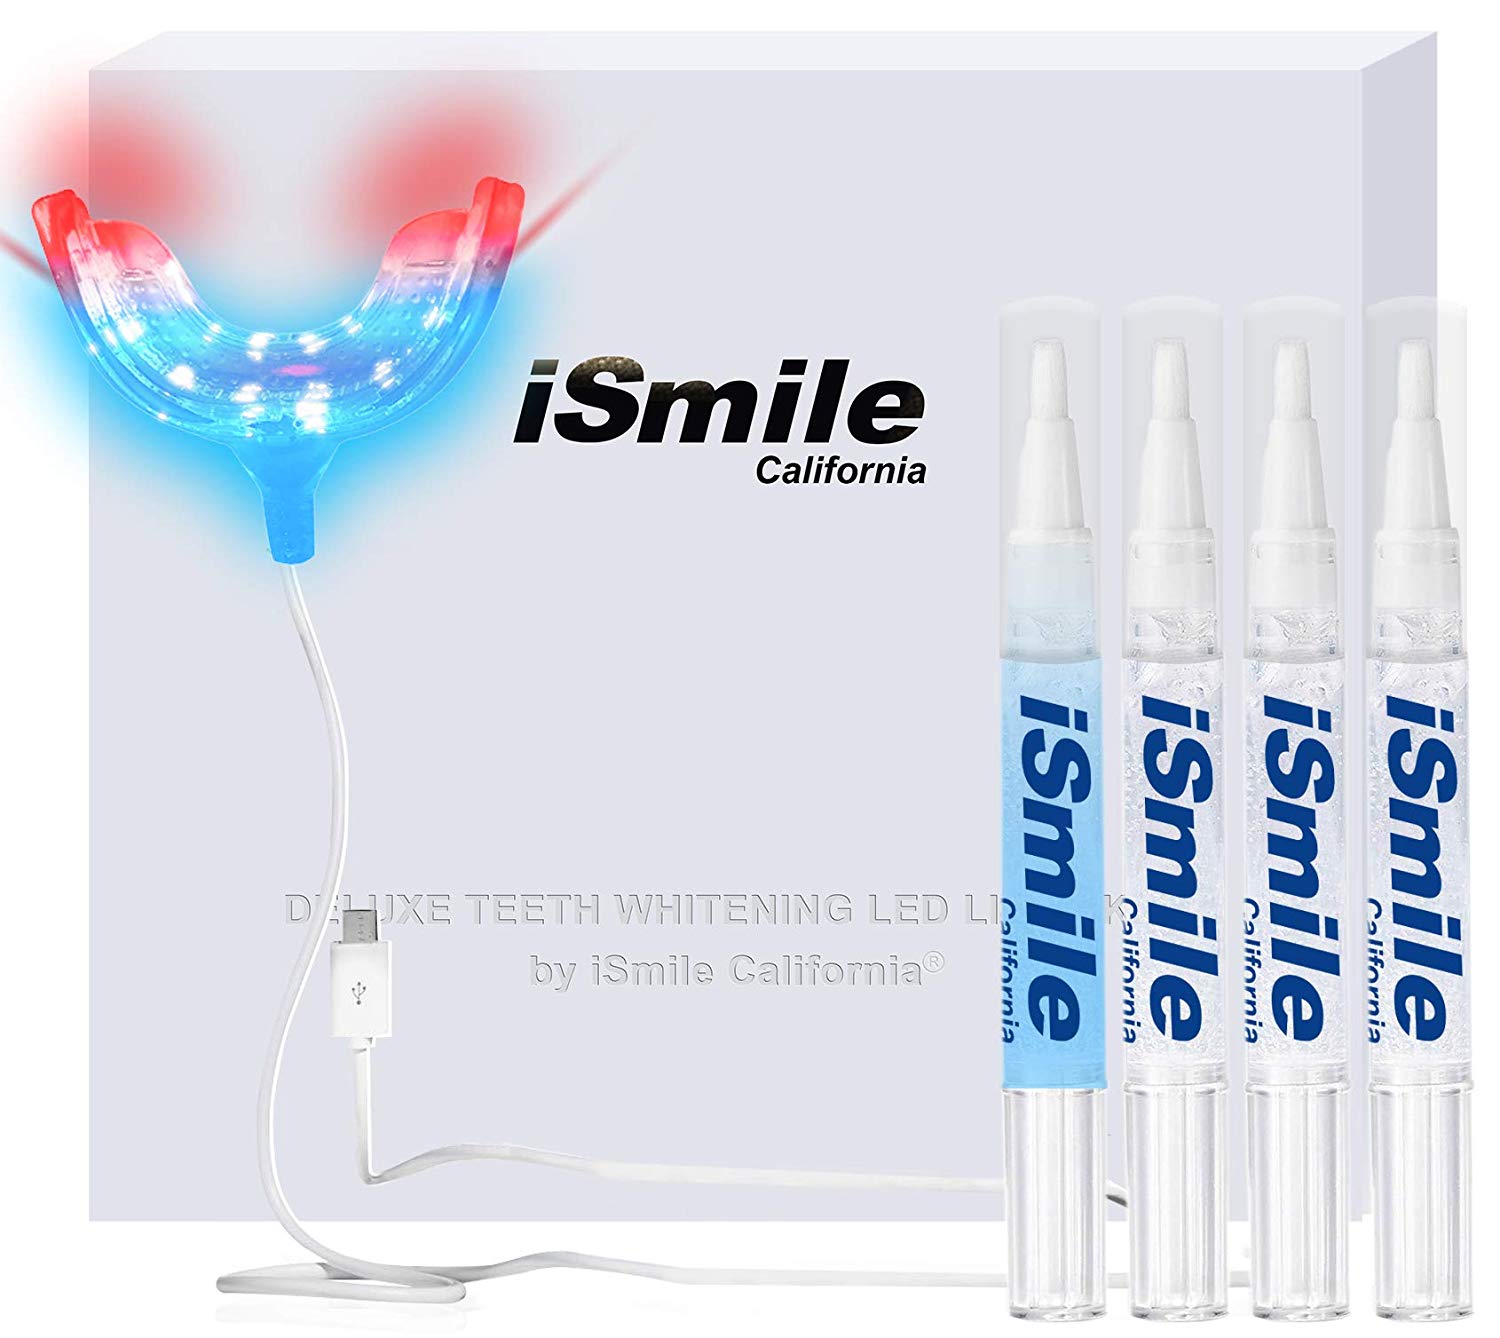 iSmile California Teeth Whitening Kit with LED Light